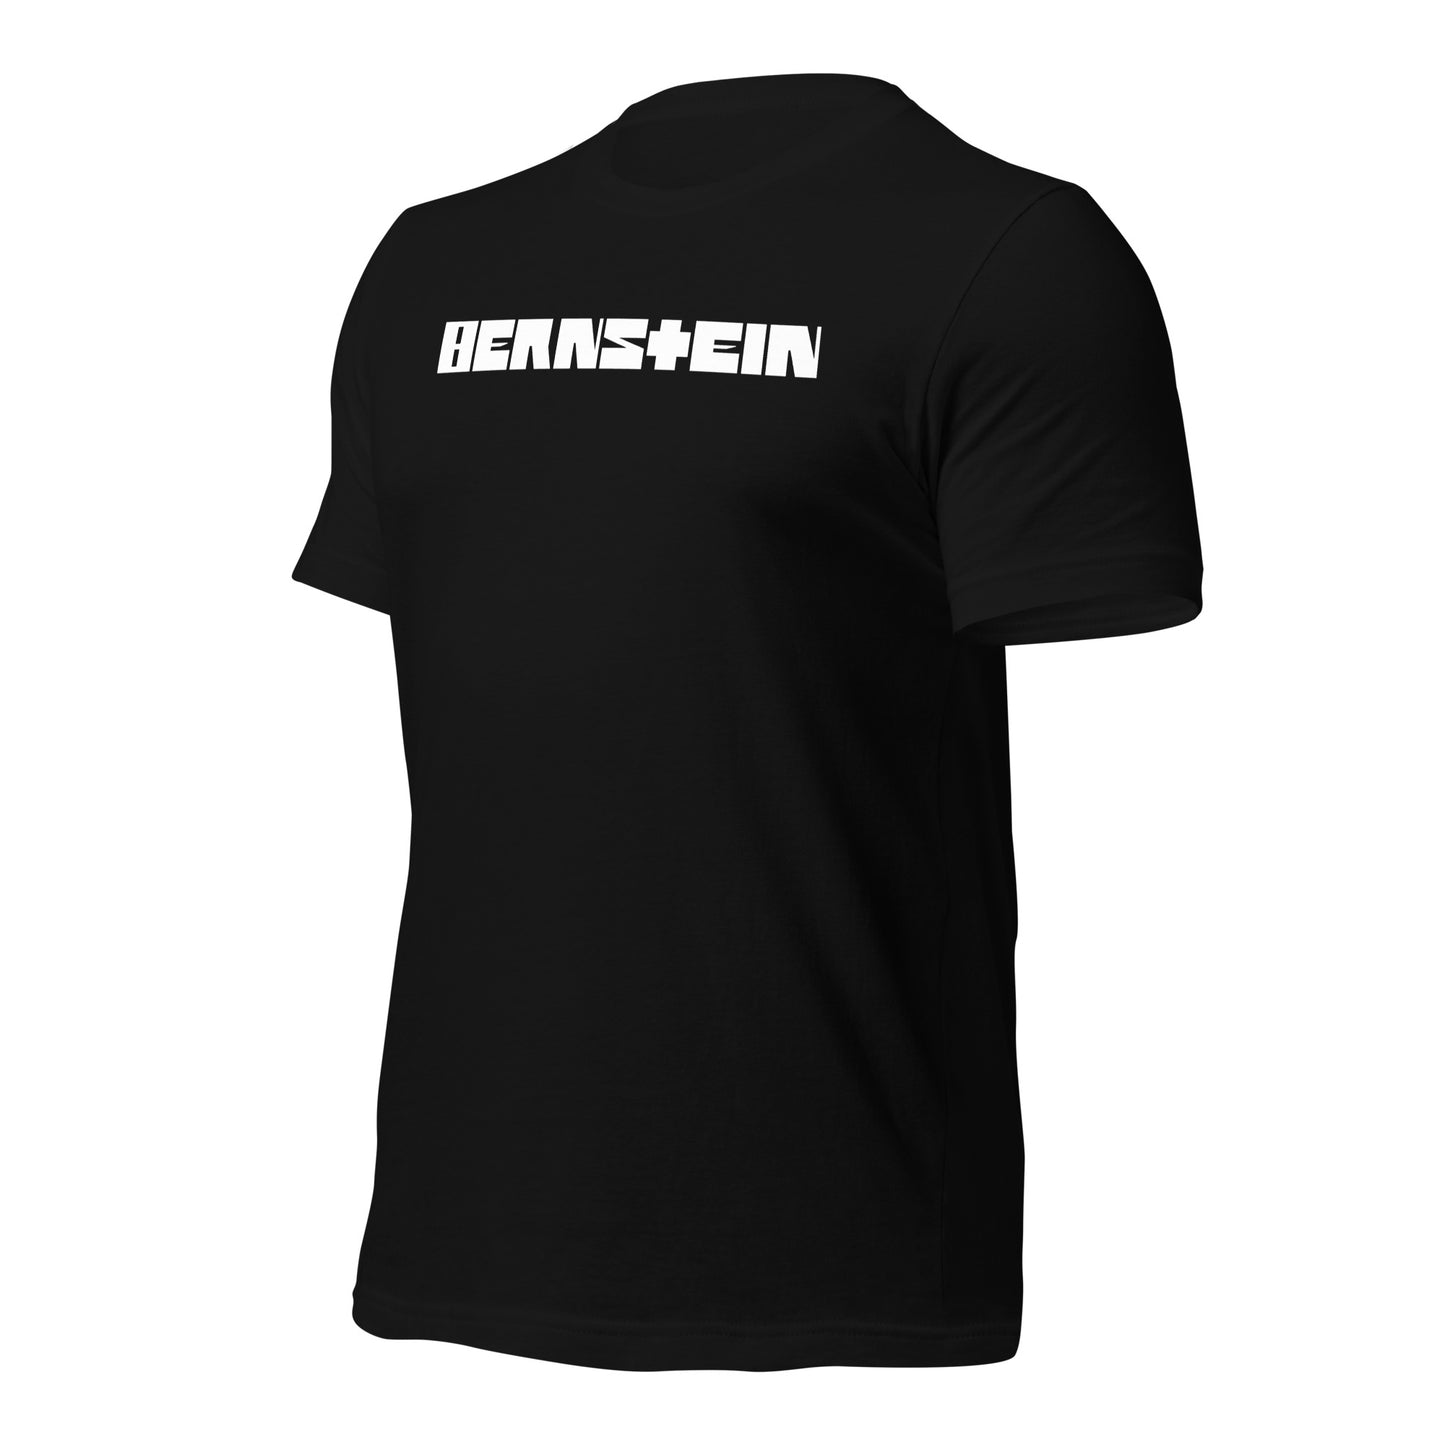 Leonard Bernstein - Band Tees Unisex t-shirt